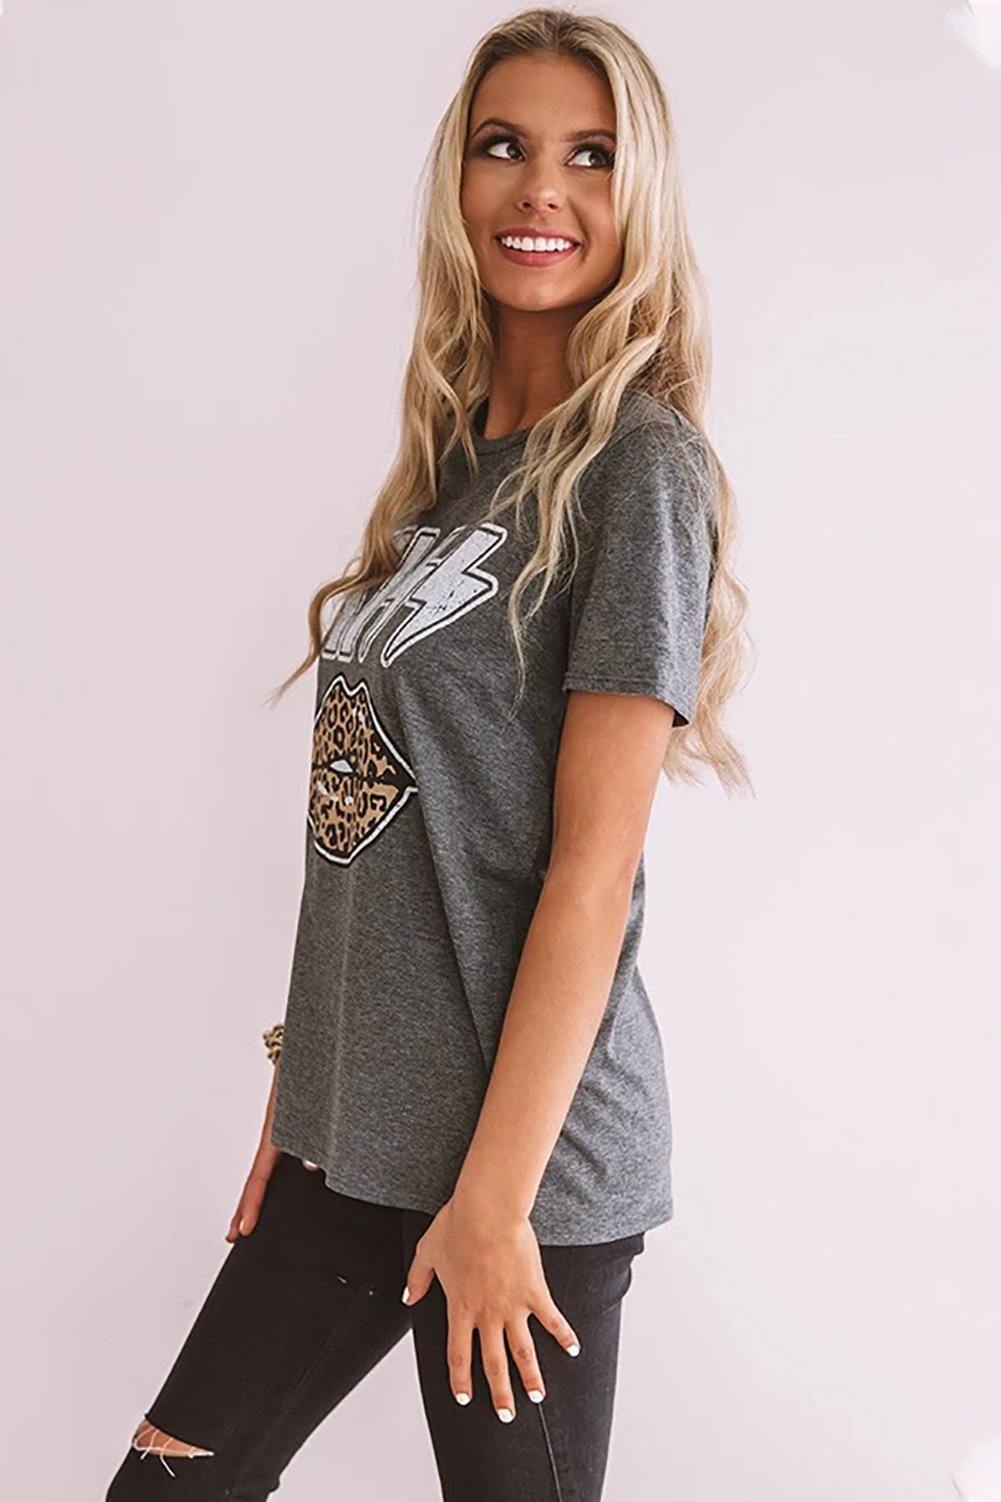 Zoe Kiss Leopard Lip Black T-shirt - The Bohemian Closet